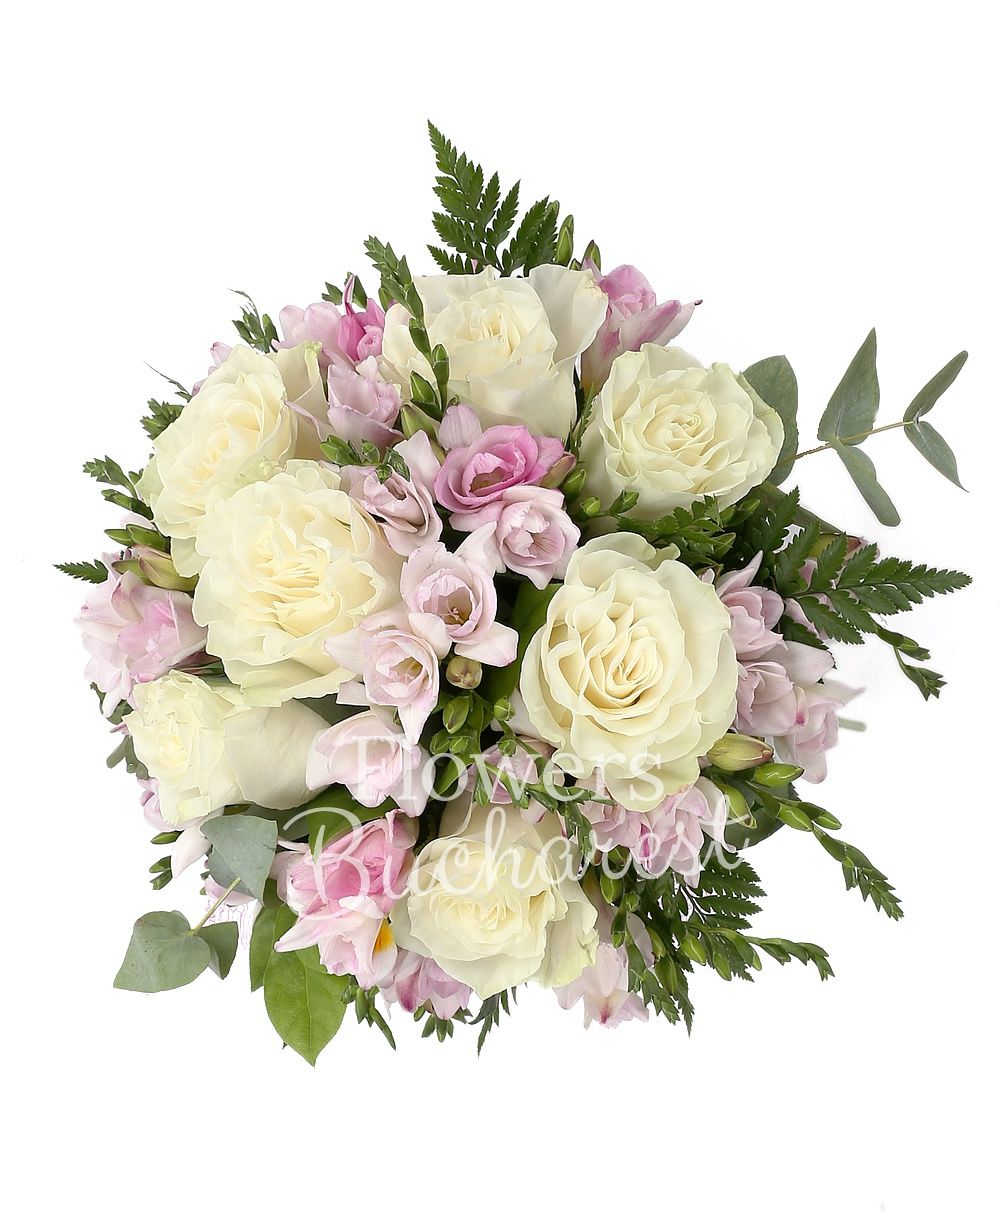 7 white roses, 20 pink freesias,greenery